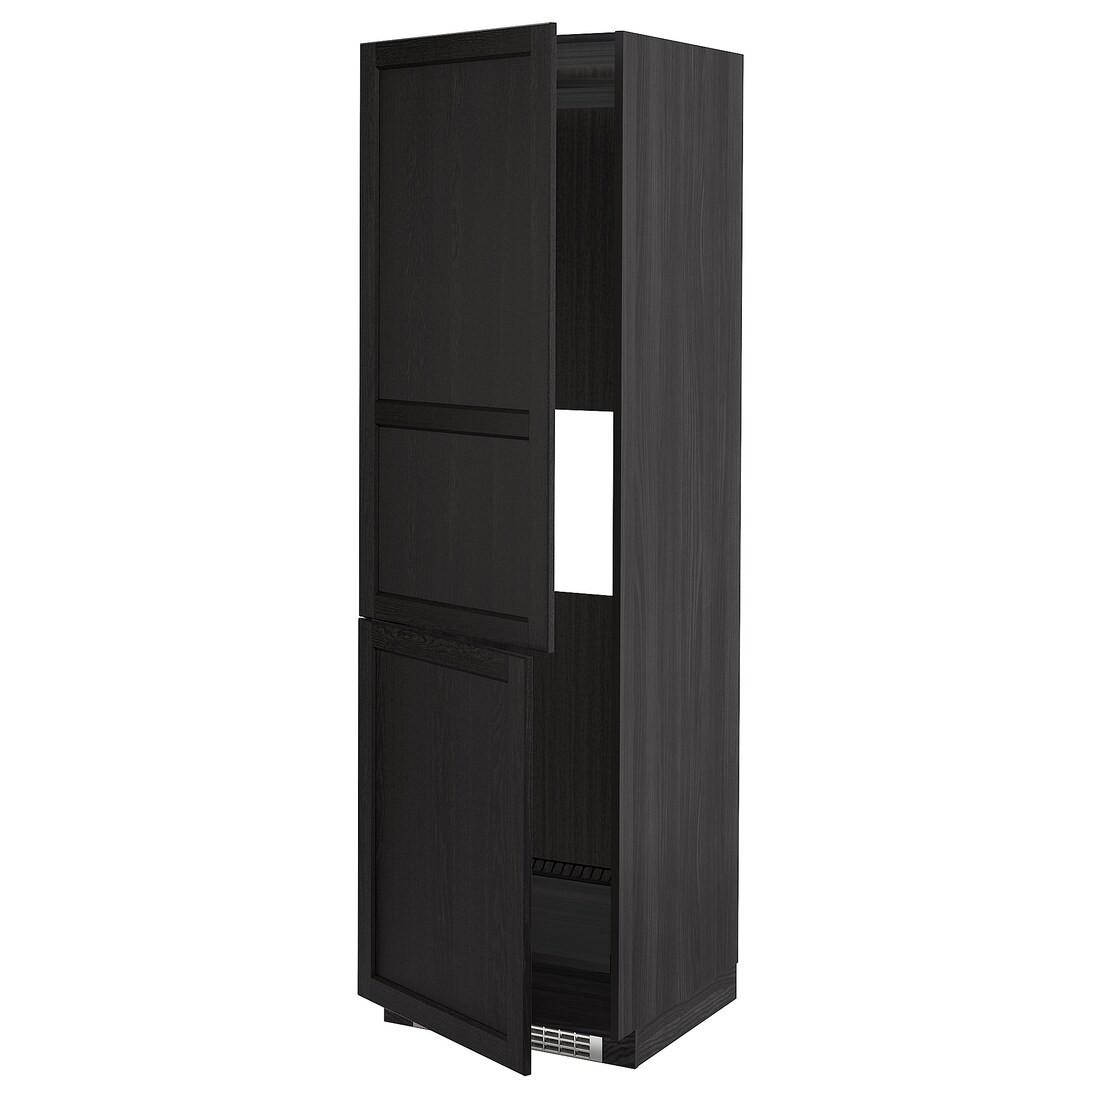 IKEA METOD МЕТОД Высокий шкаф для холодильника / морозильника, черный / Lerhyttan черная морилка, 60x60x200 см 89260264 | 892.602.64